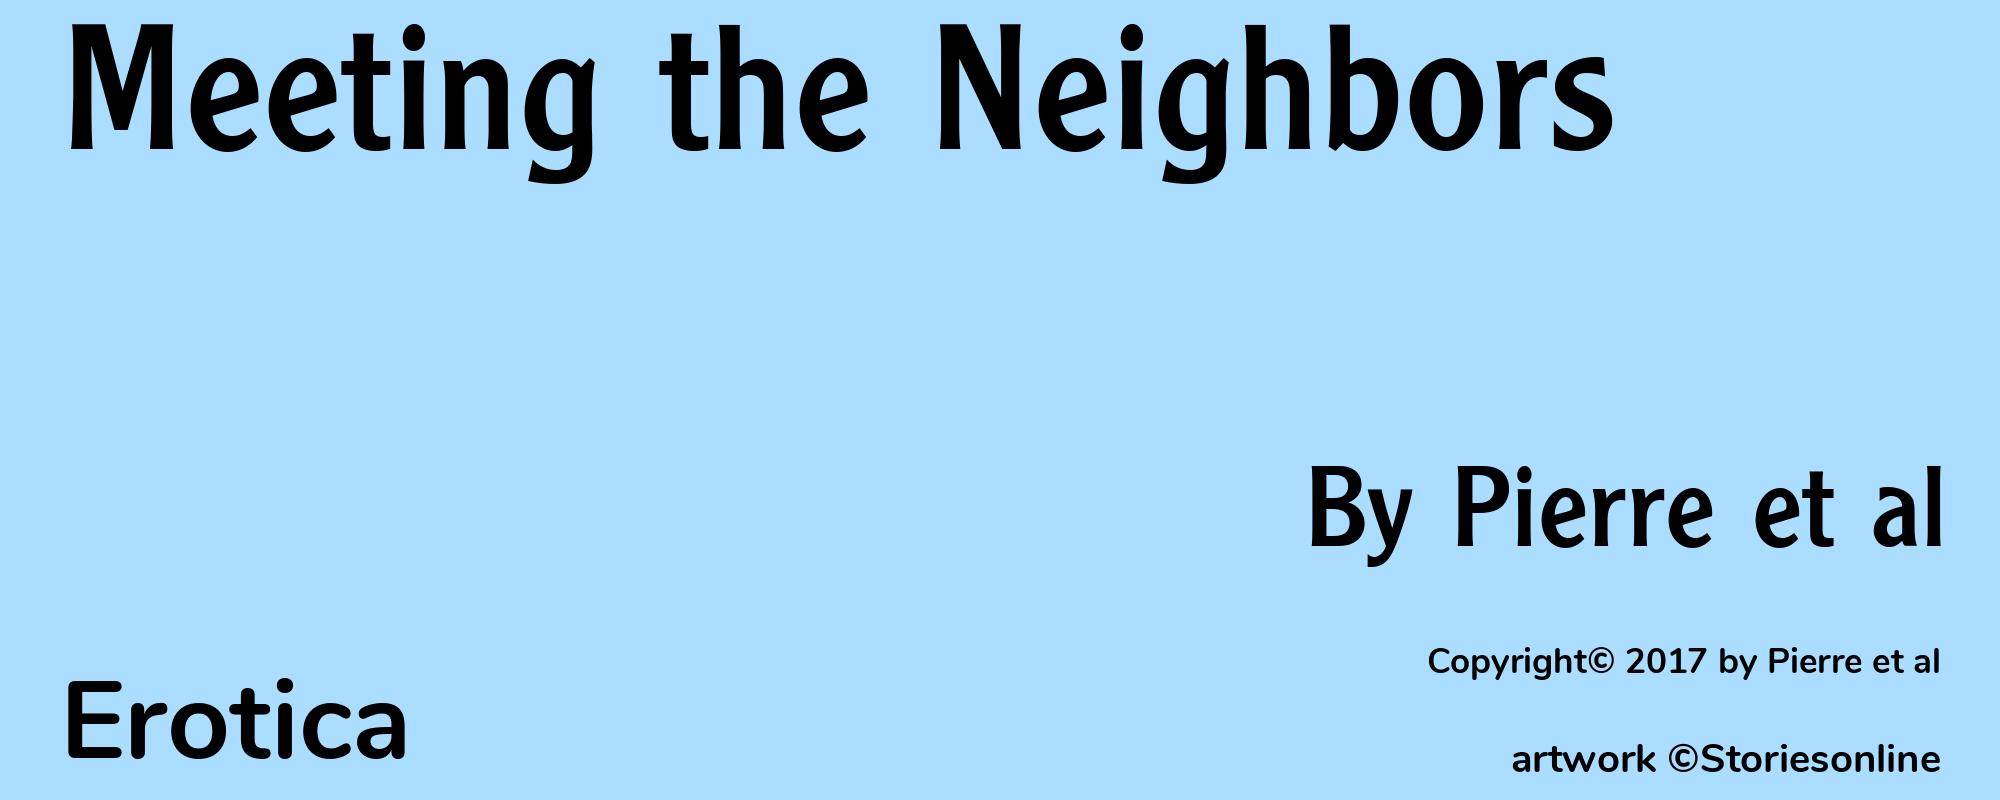 Meeting the Neighbors - Cover